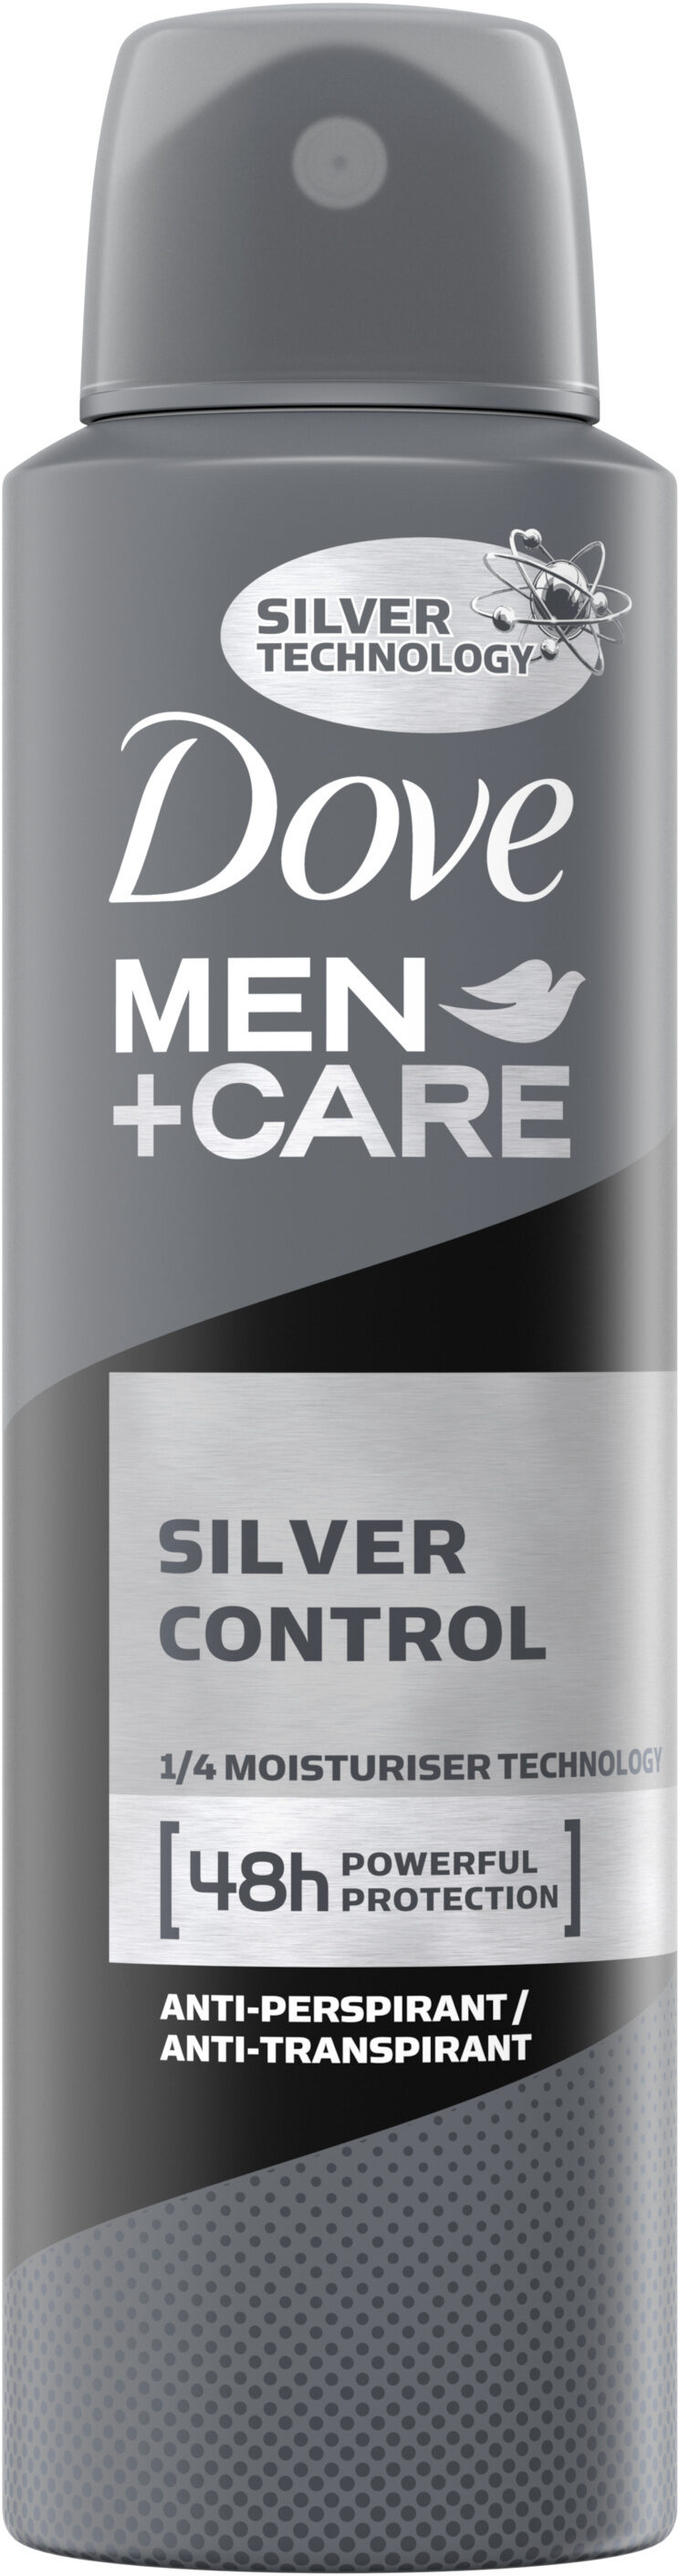 Dove Men+Care Anti transpirant Silver Control 48H Spray - Product - fr